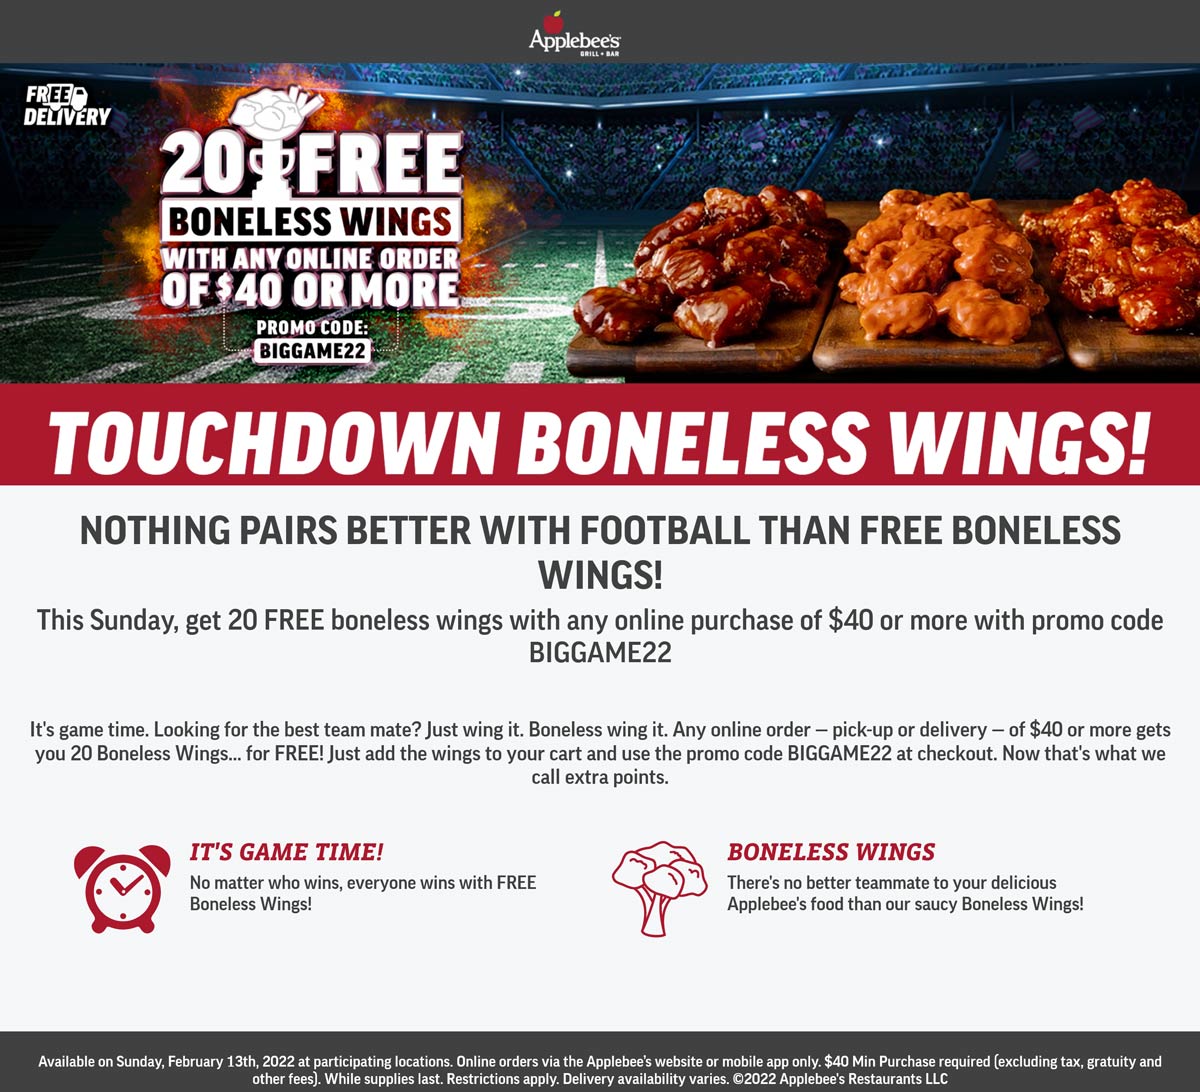 Applebees restaurants Coupon  20 free boneless chicken wings with $40 spent Sunday at Applebees via promo code BIGGAME22 #applebees 